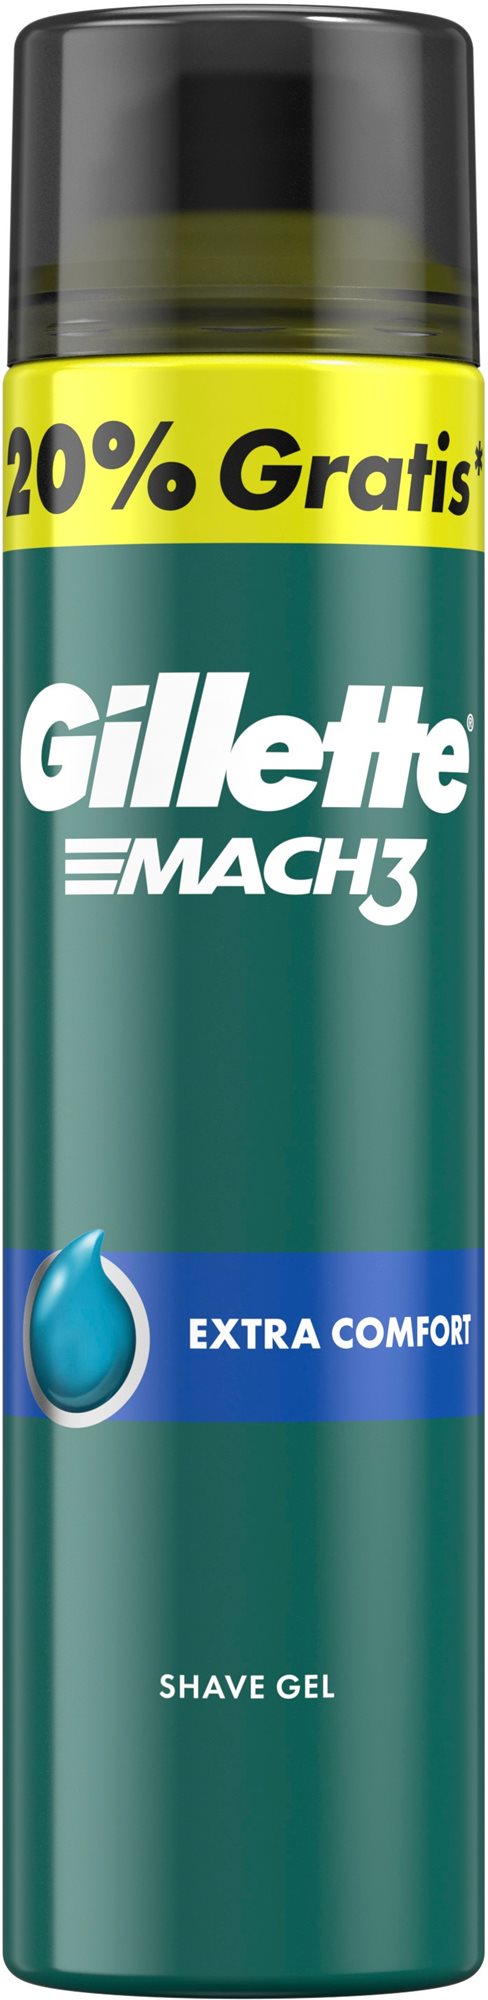 GILLETTE Mach3 Extra Comfort Férfi borotvagél 240 ml